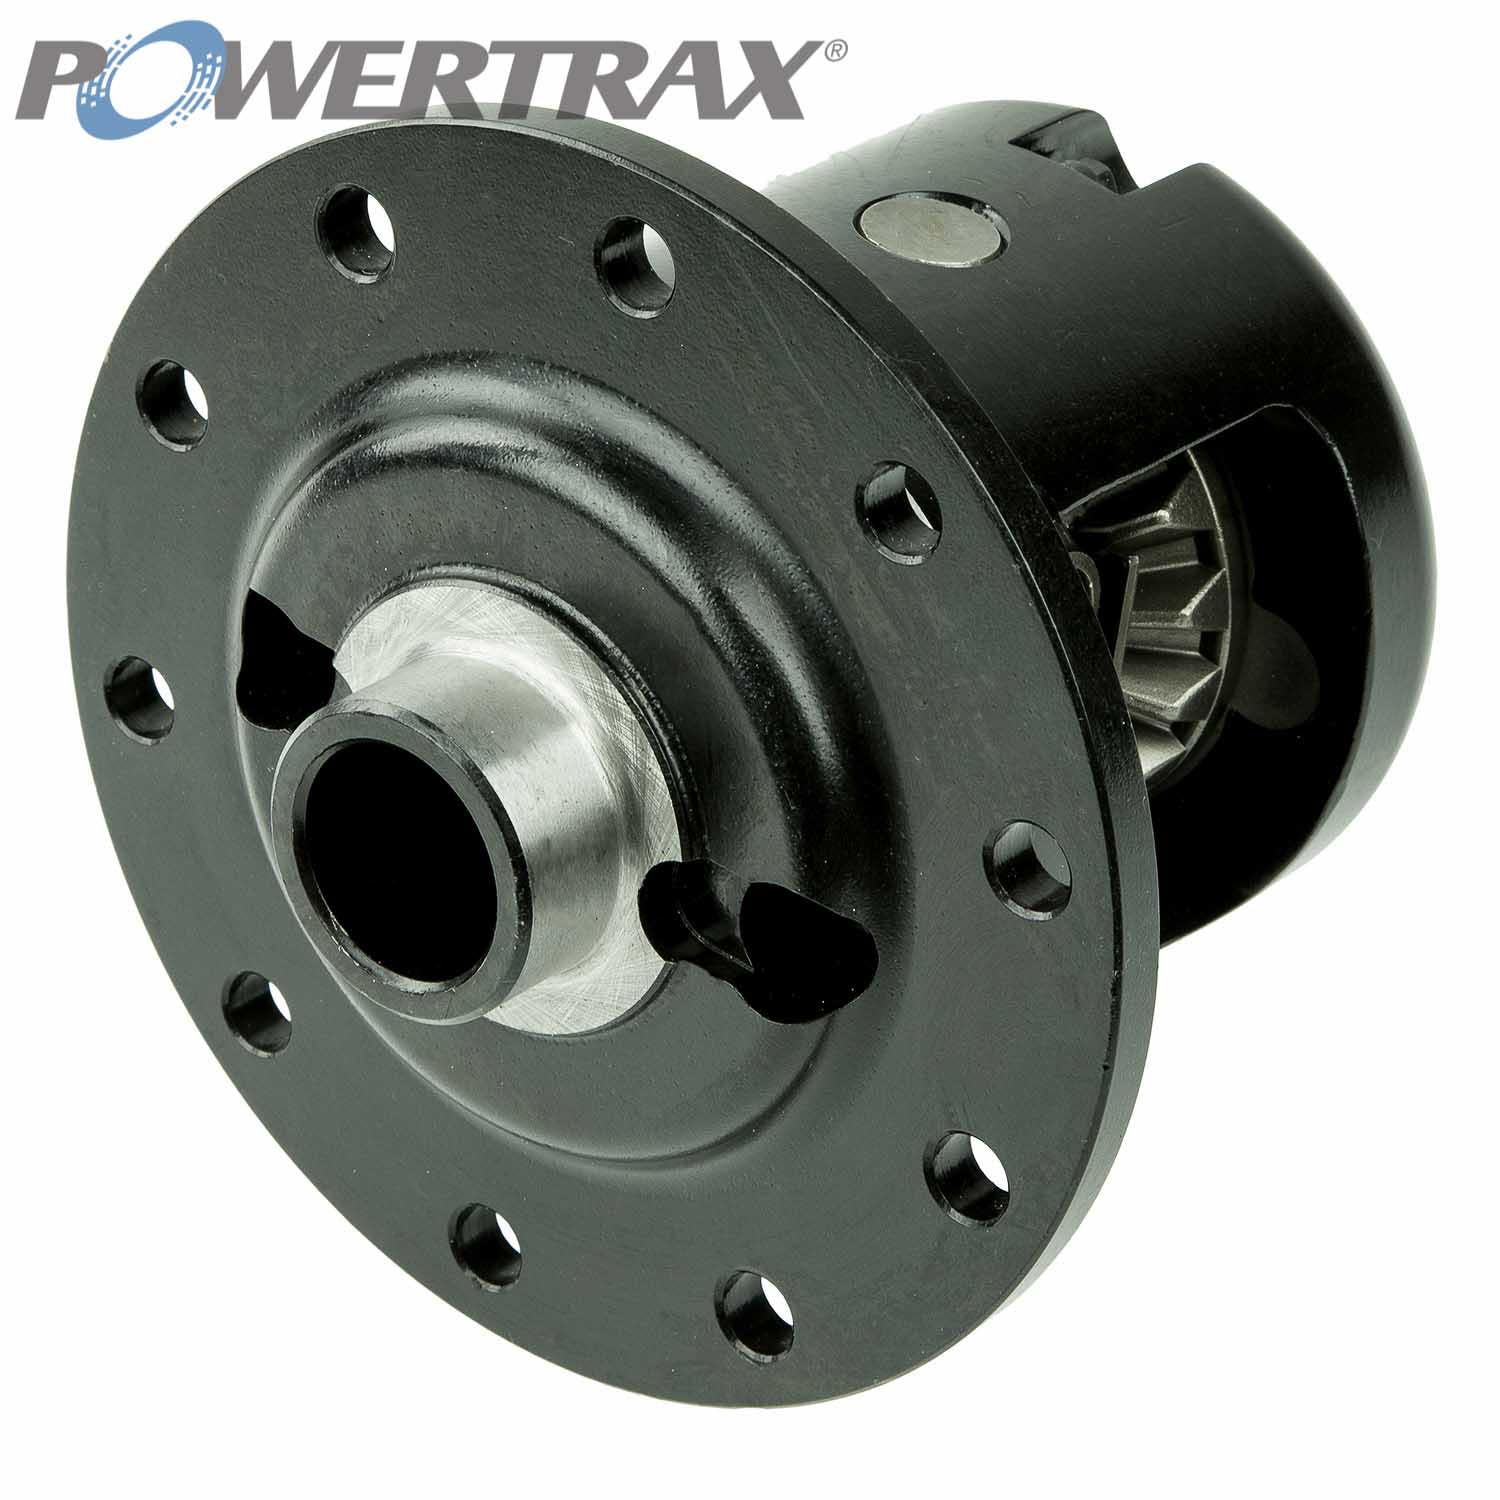 PowerTrax LS201028 Powertrax - Grip LS Traction System